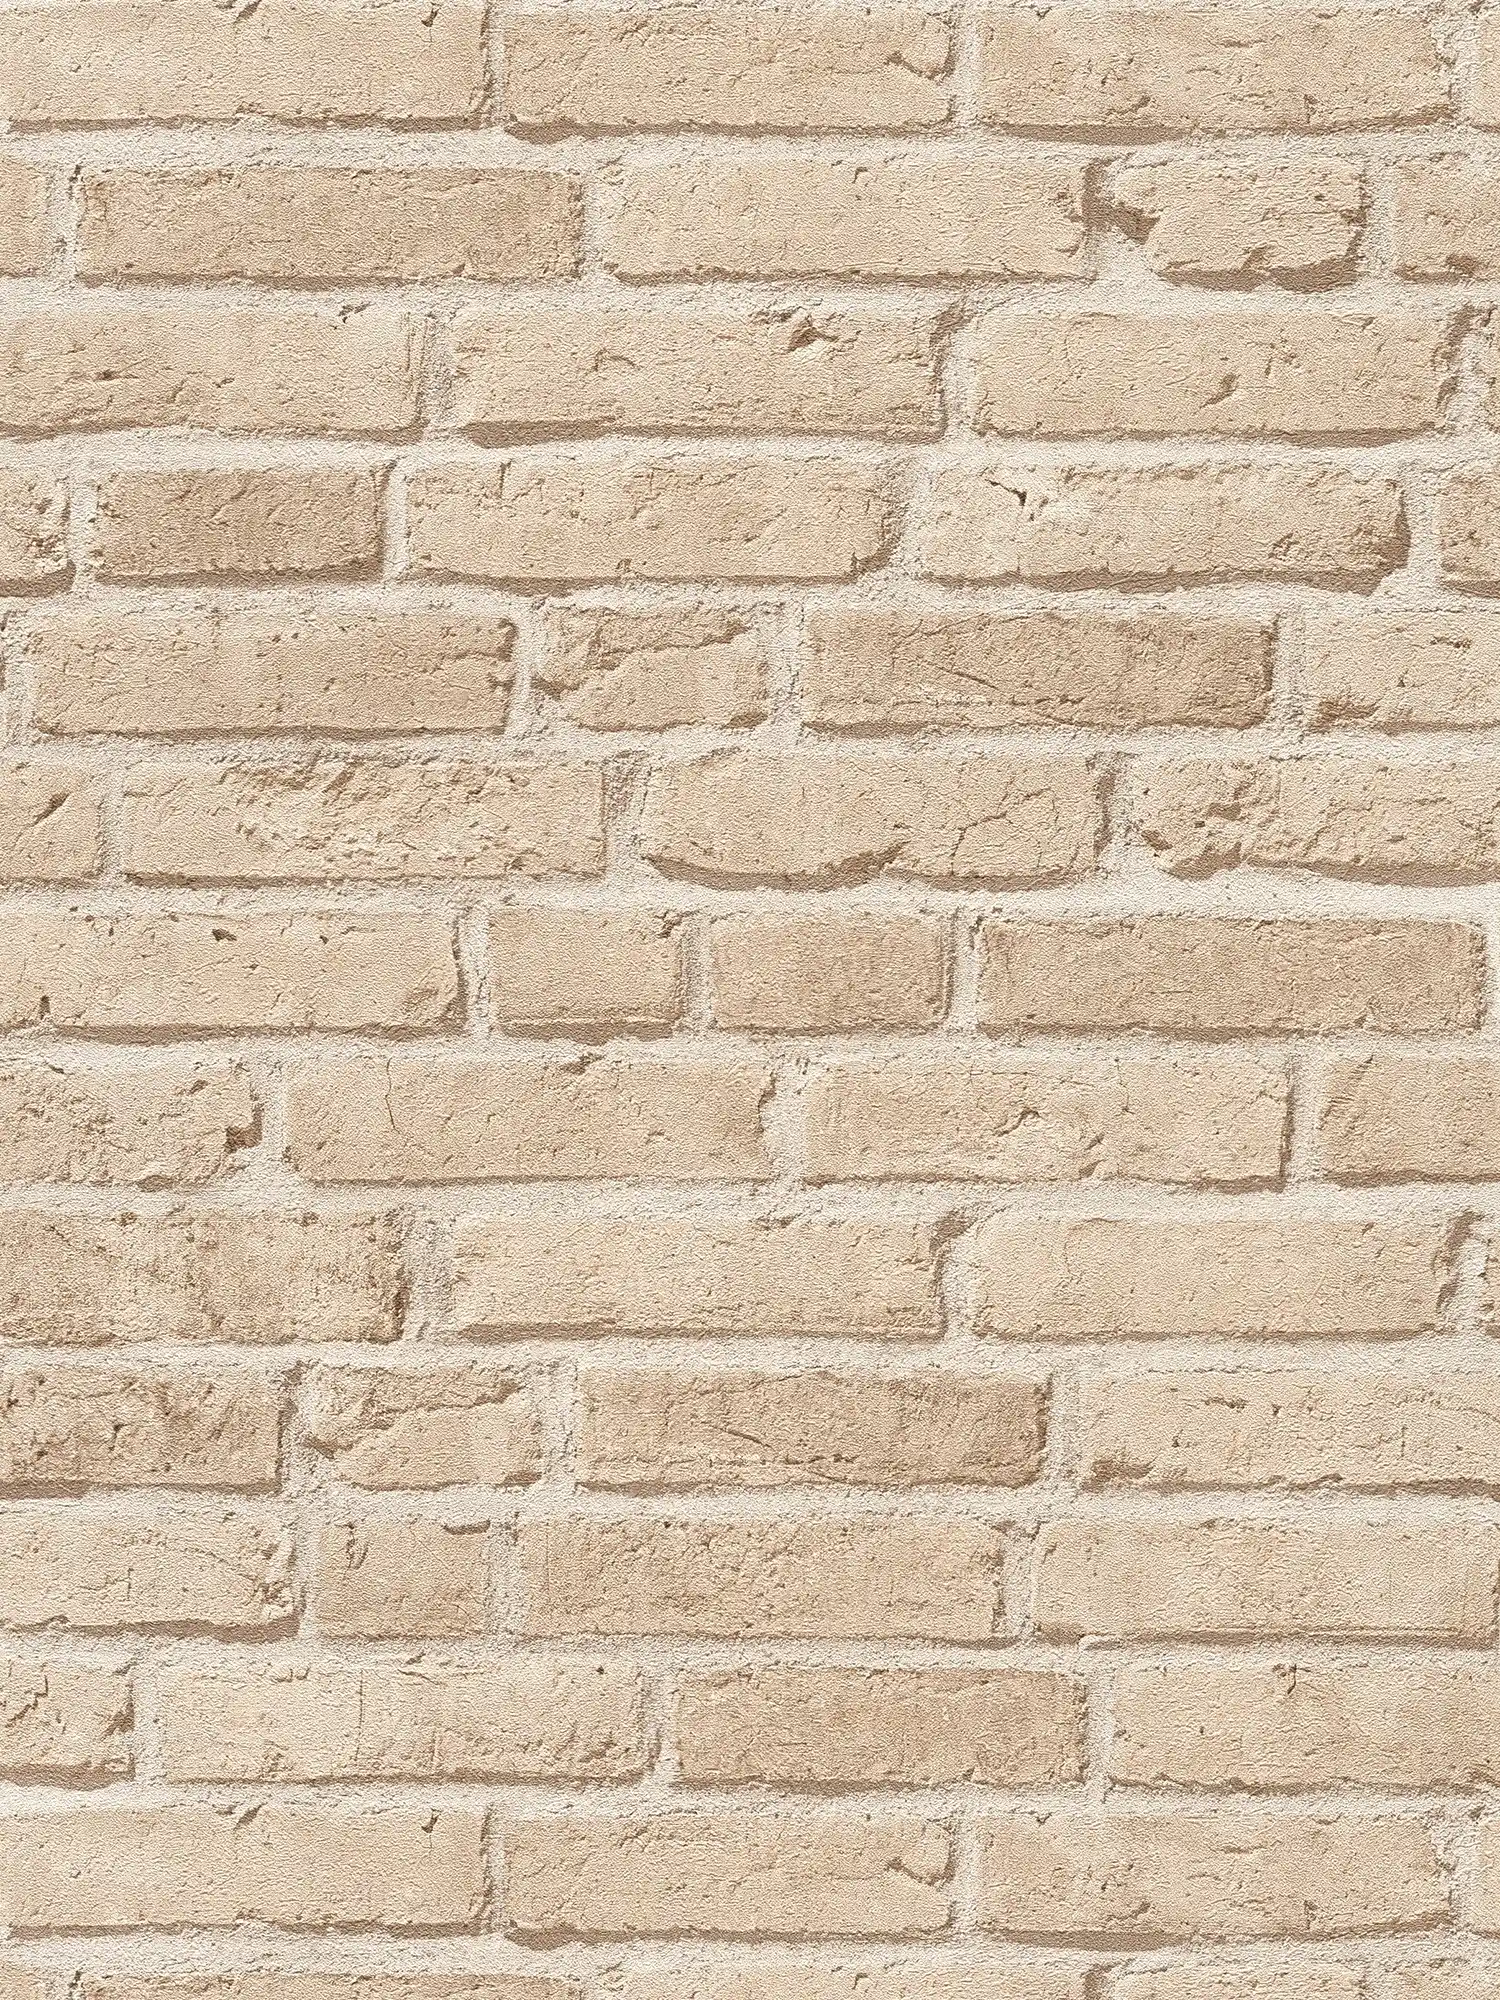 Brick wallpaper with brickwork & 3D effect - beige
